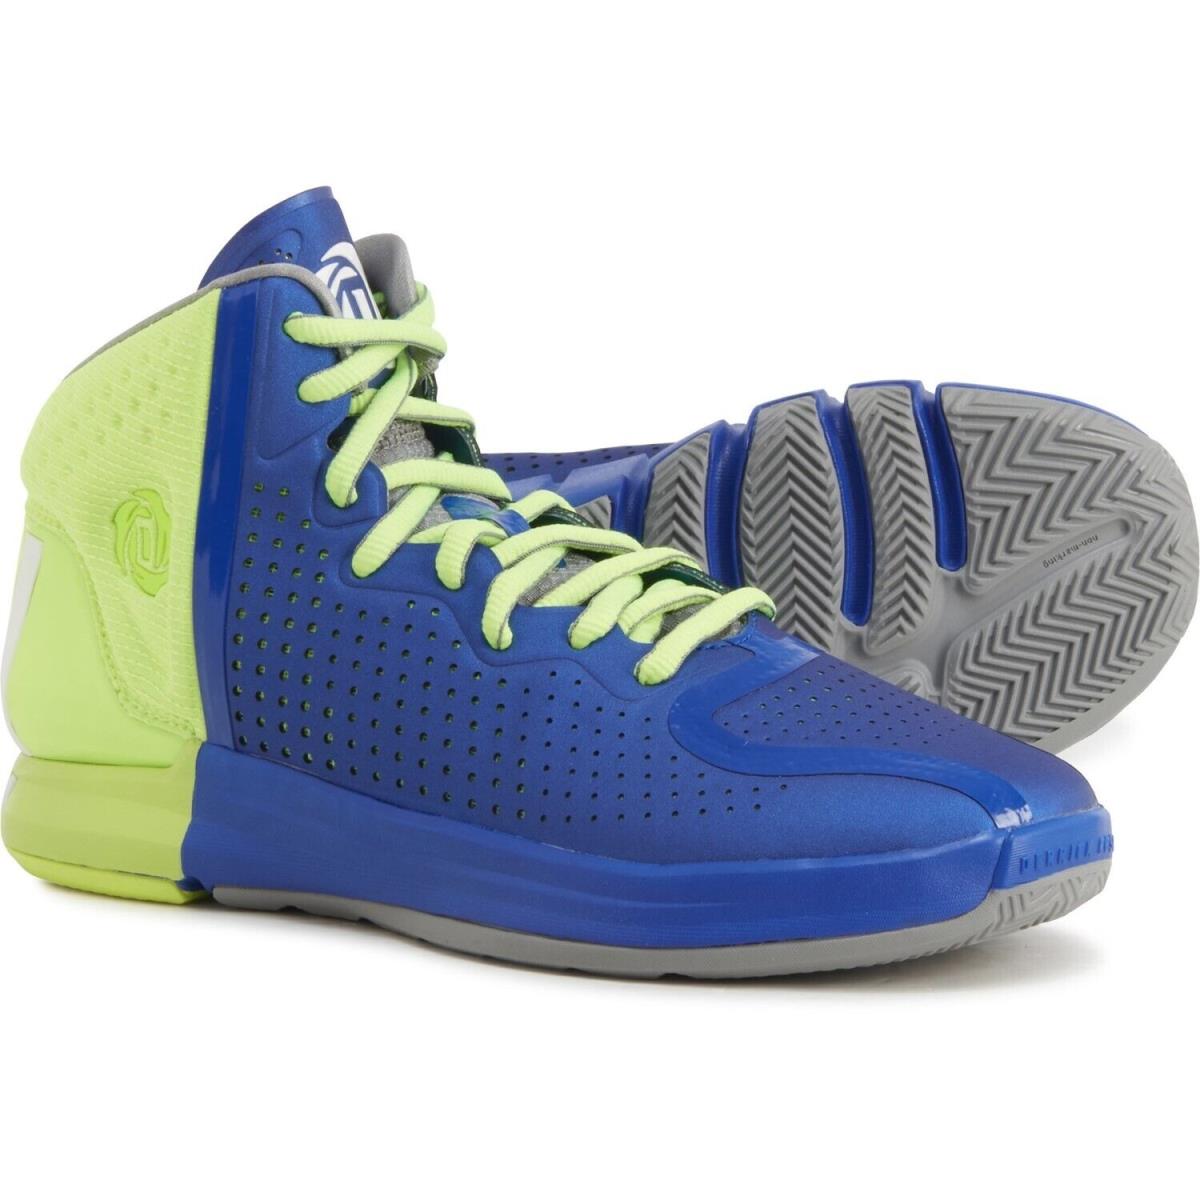 Adidas D Rose 4 Restomod Basketball Shoes For Men Blue Size 8